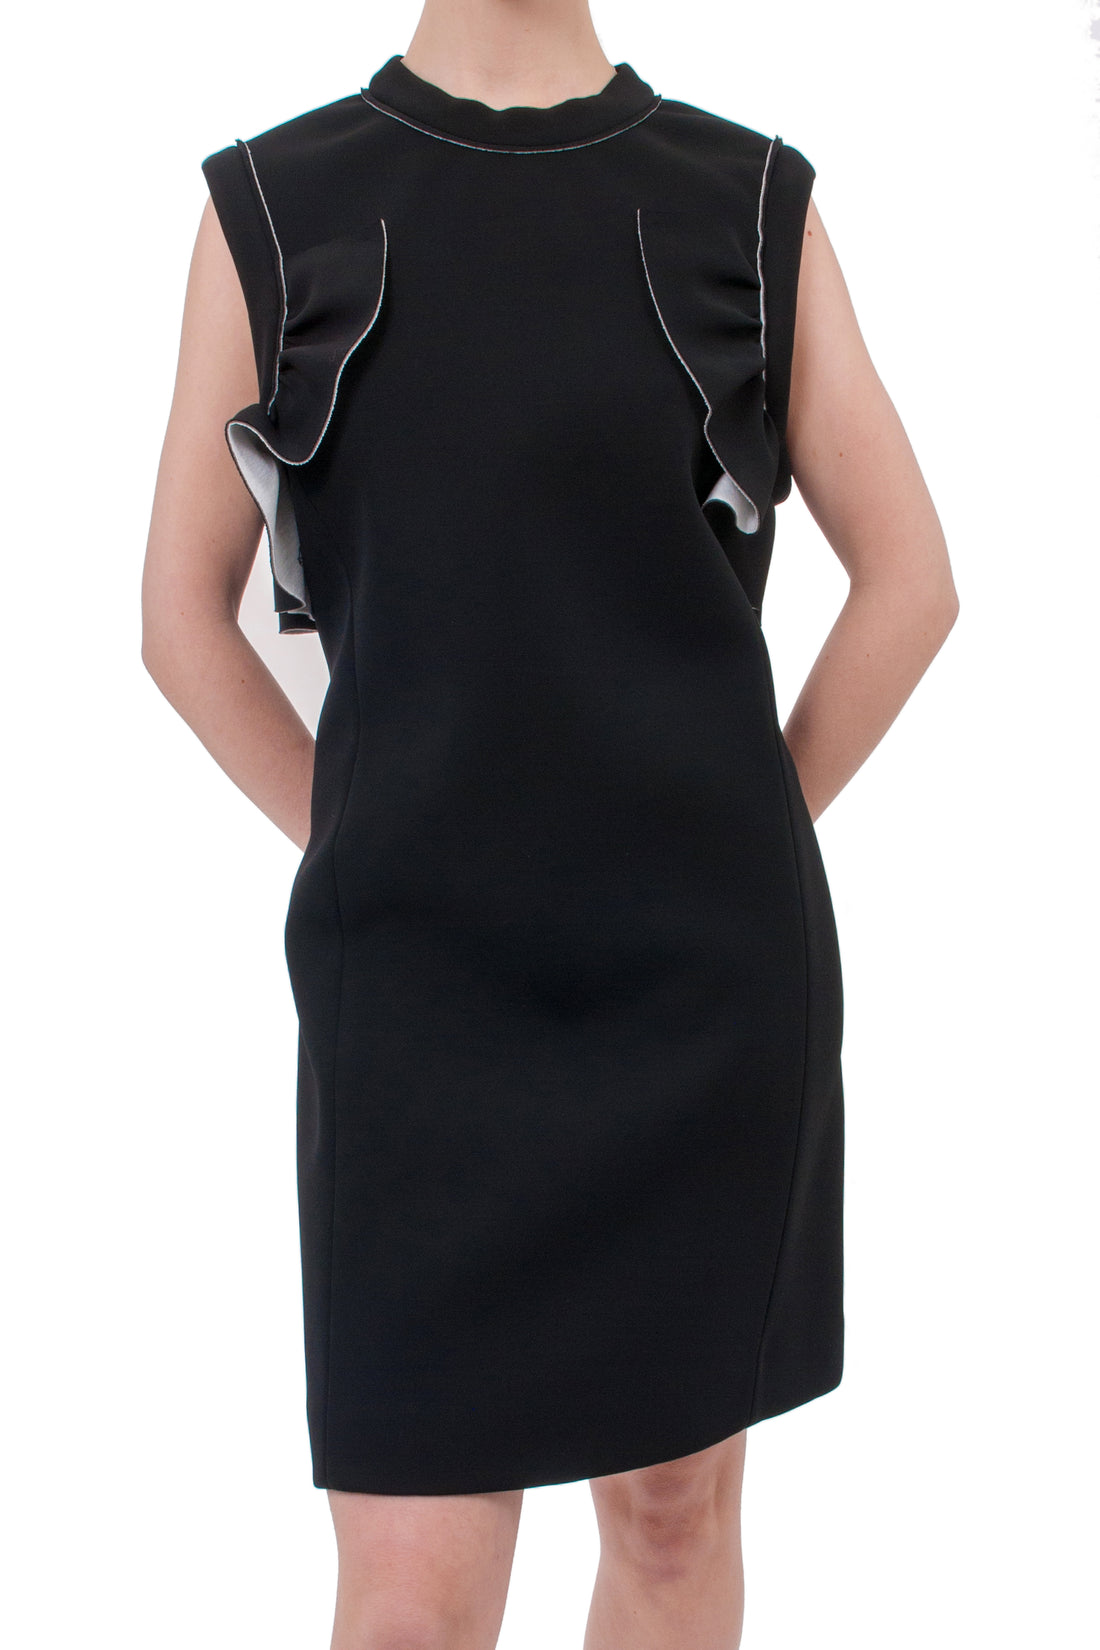 Marni Black Neoprene Sleeveless Ruffle Dress